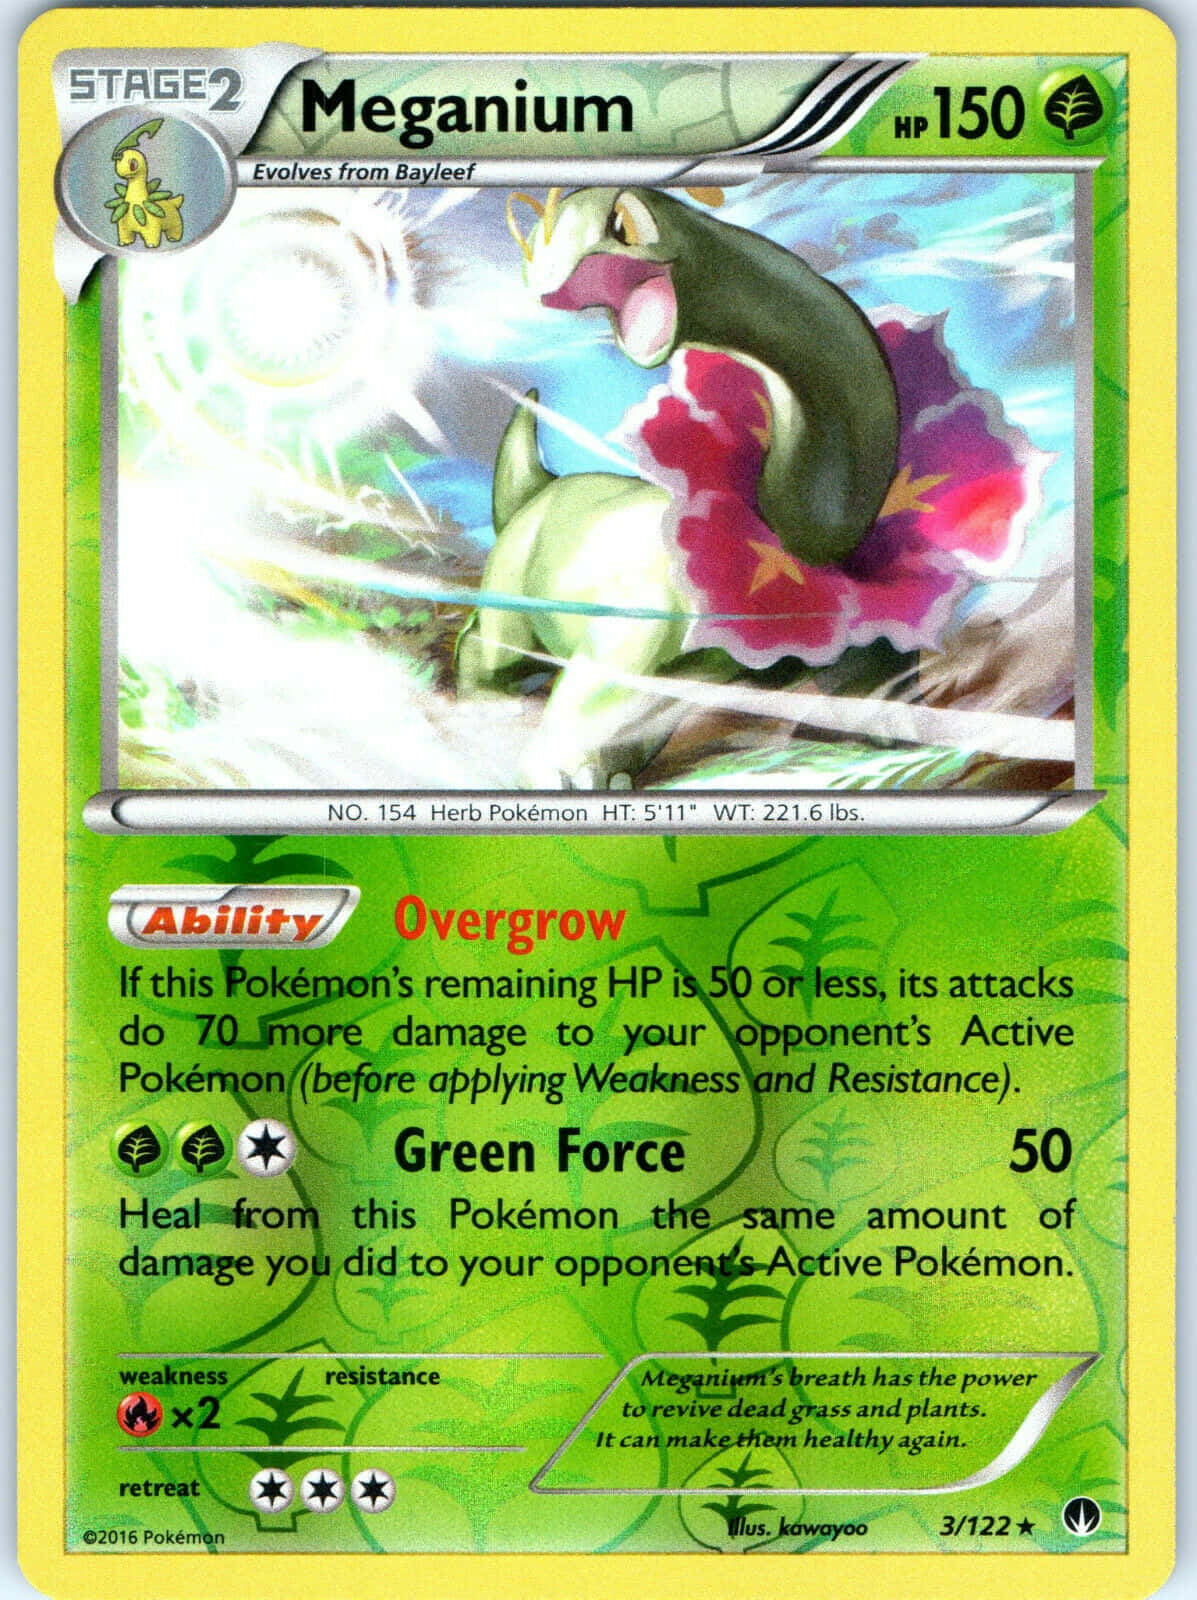 Green Meganium Pokemon Trading Card Wallpaper